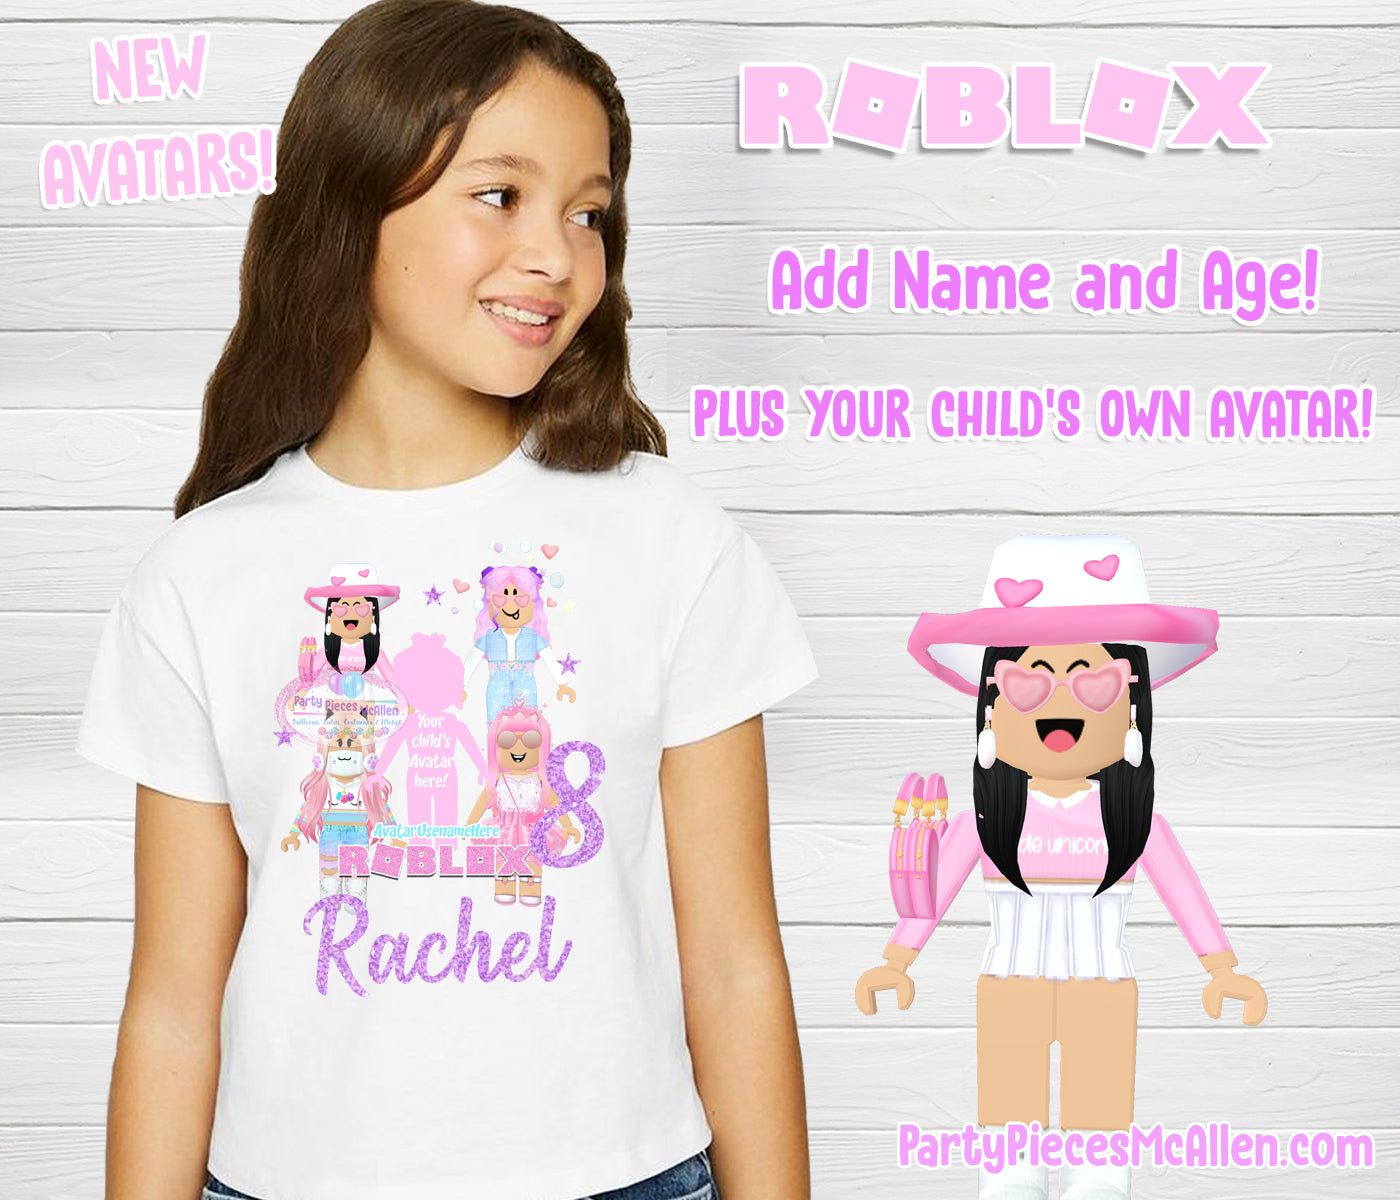 Roblox Face 5 Girl Character T-Shirt, Children Costume Shirts